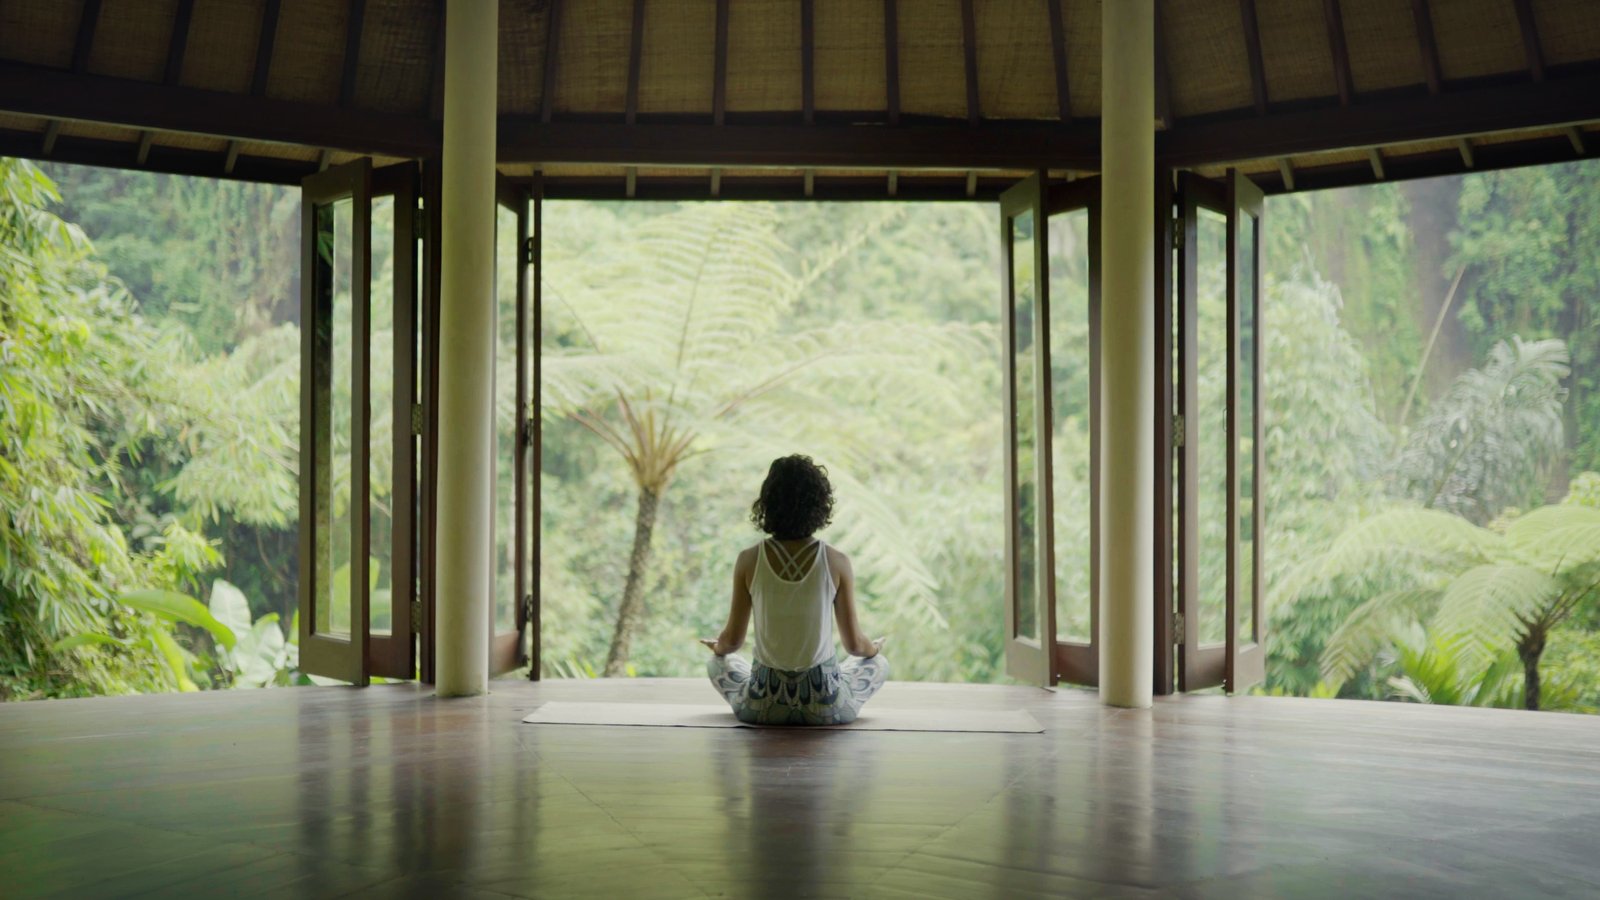 2021 Best Yoga Retreat in Bali  Affordable Wellness Retreats in